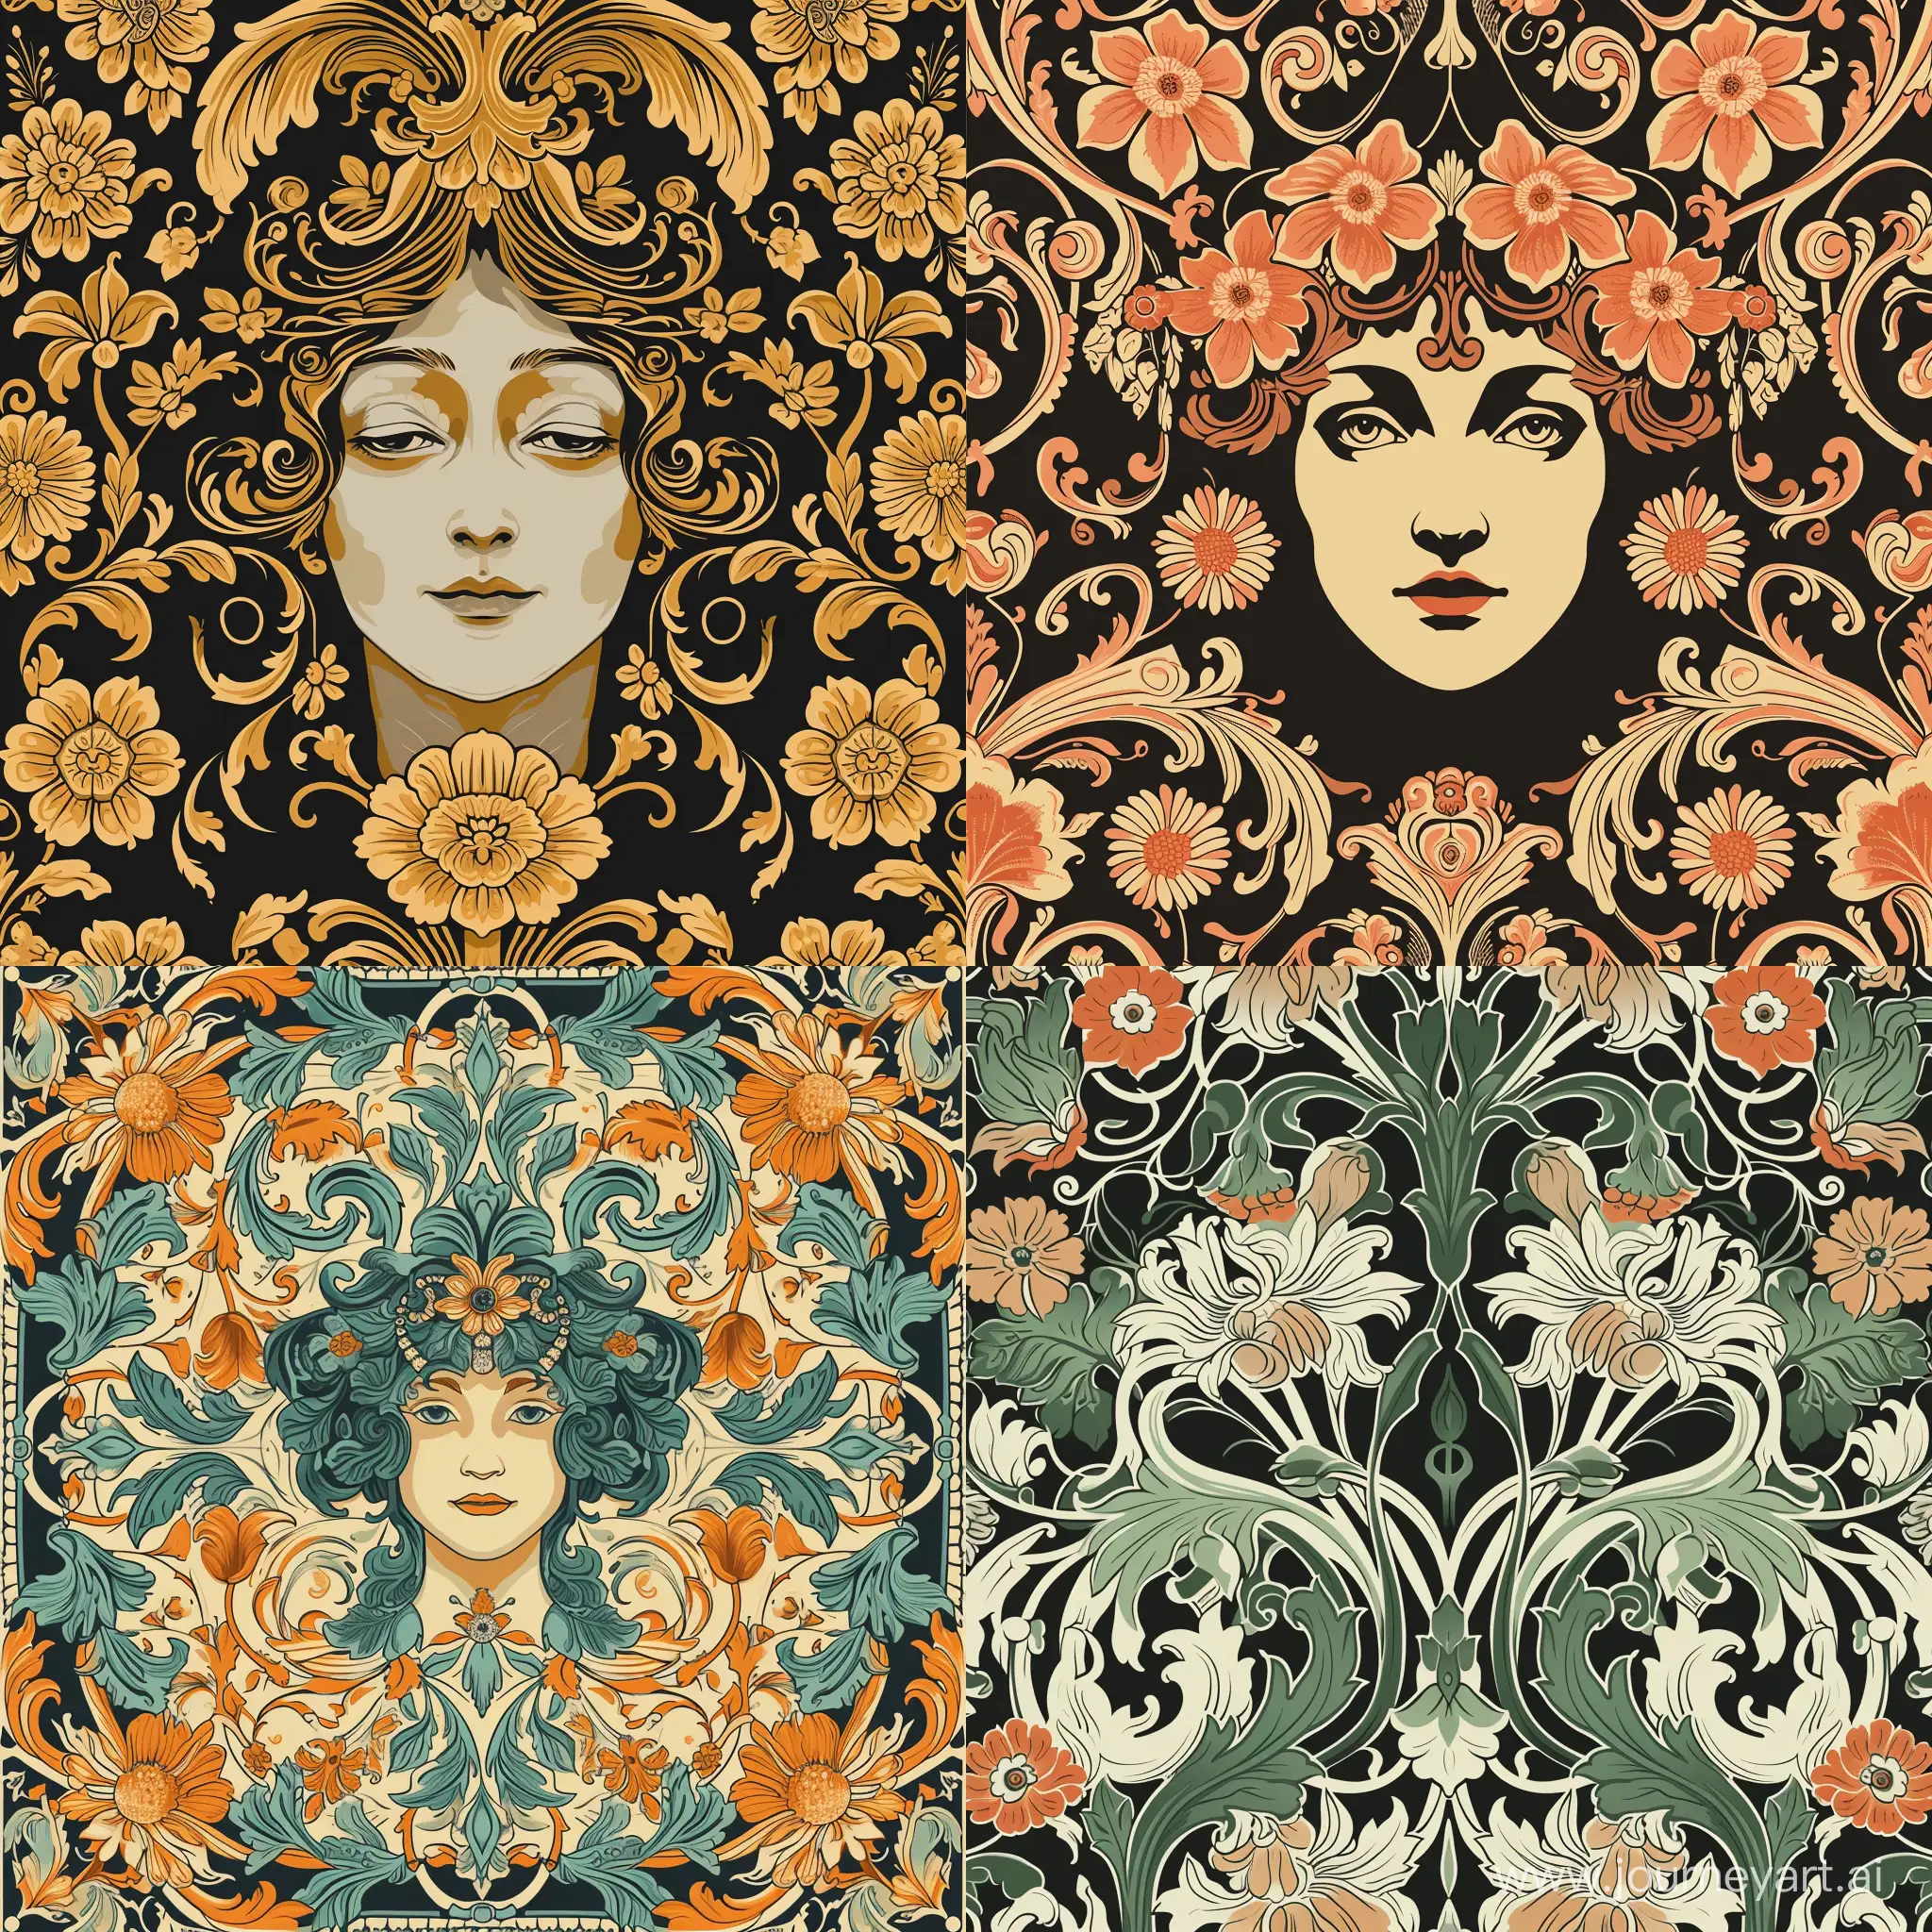 a pattern inspired by William Morris, Alphonse Mucha and Gustav Klimt